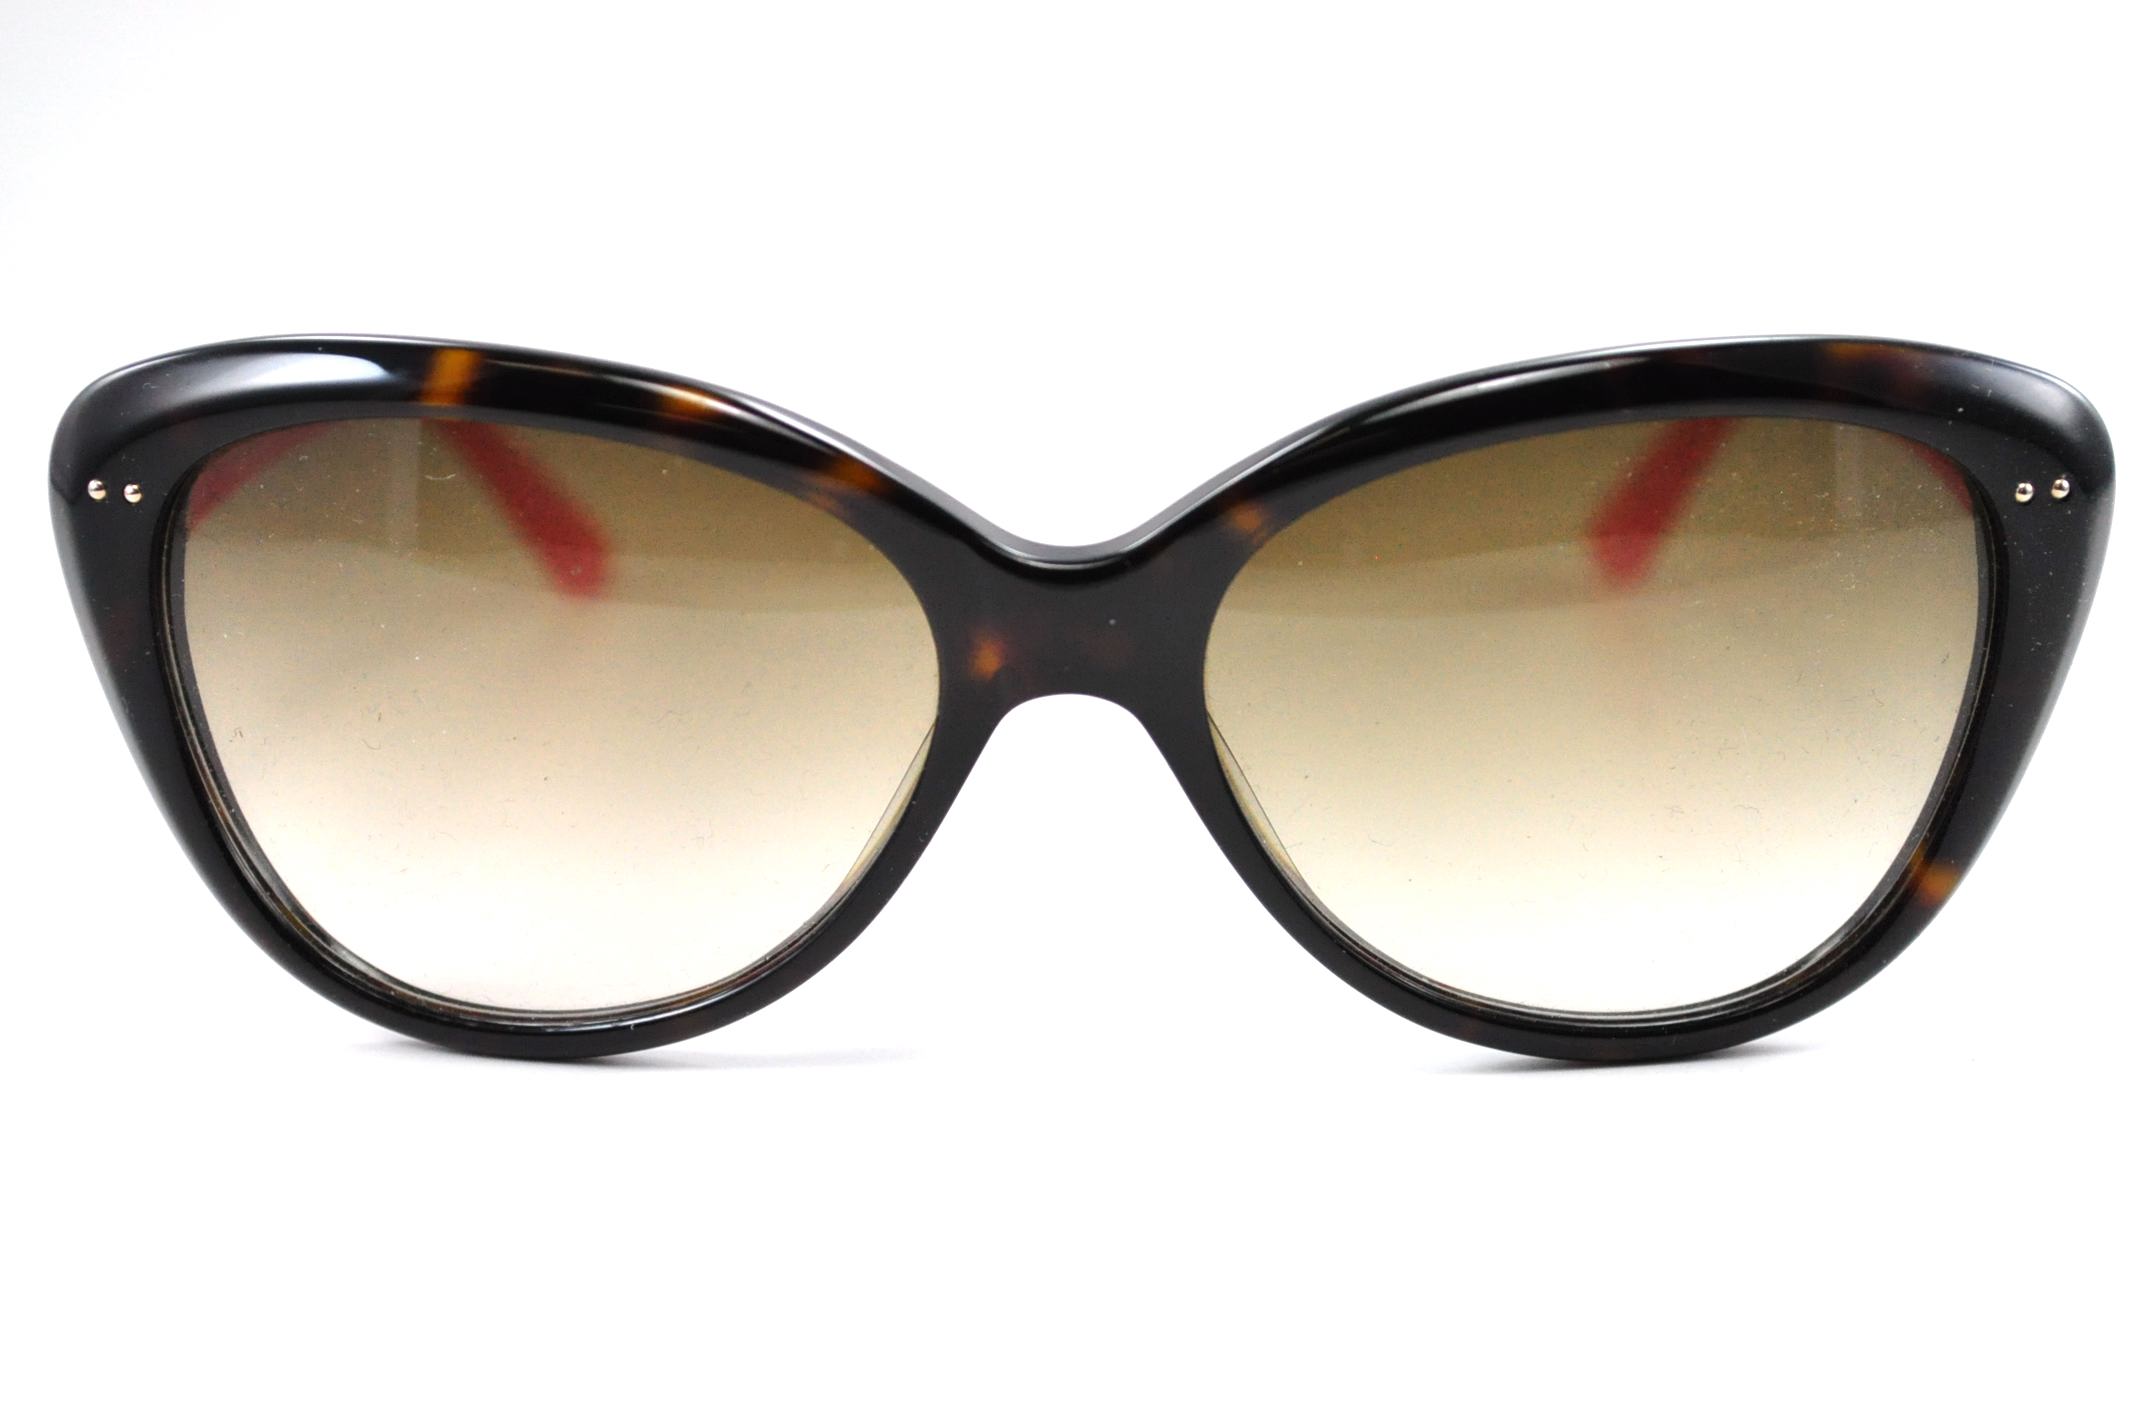 Kate Spade Angelique Women Sunglasses Tortoise Blush - image 3 of 3